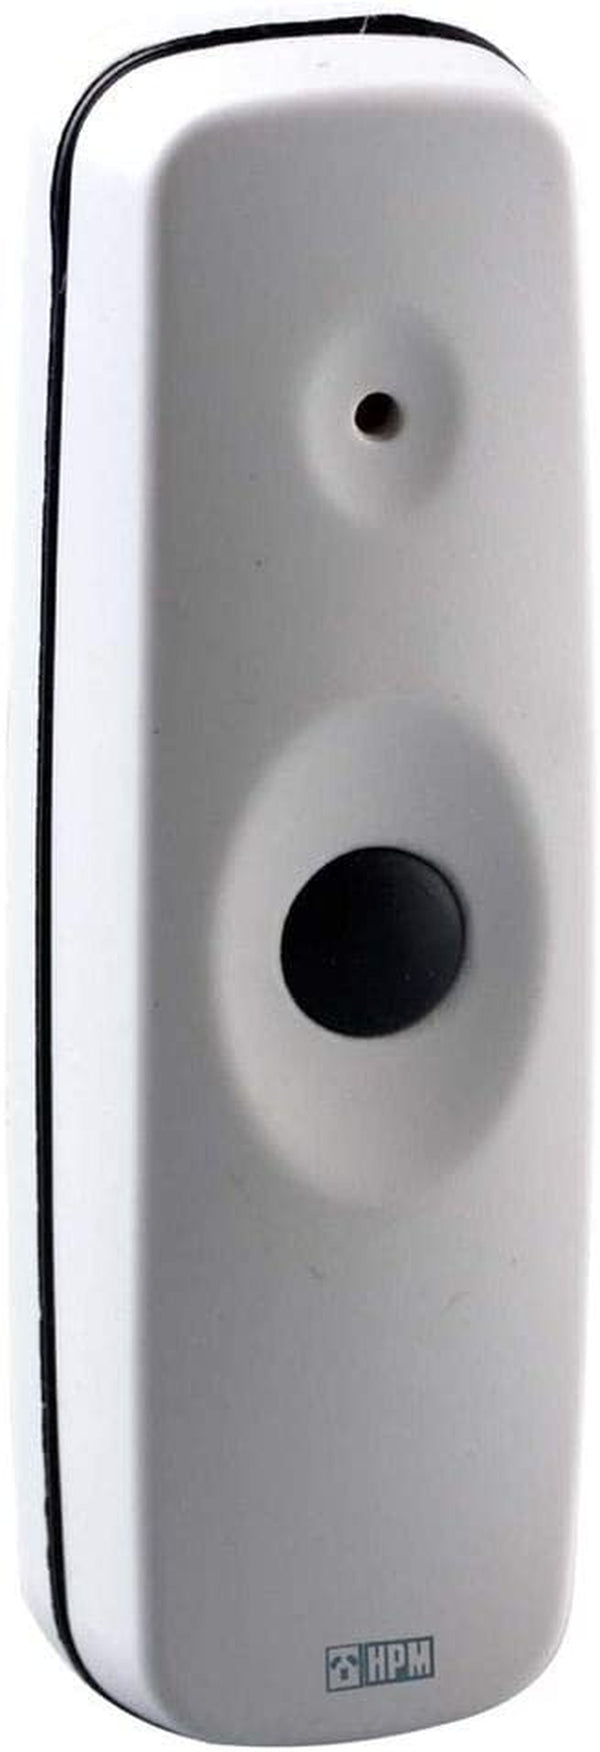 HPM D641 Series Door Chime Bell Press White